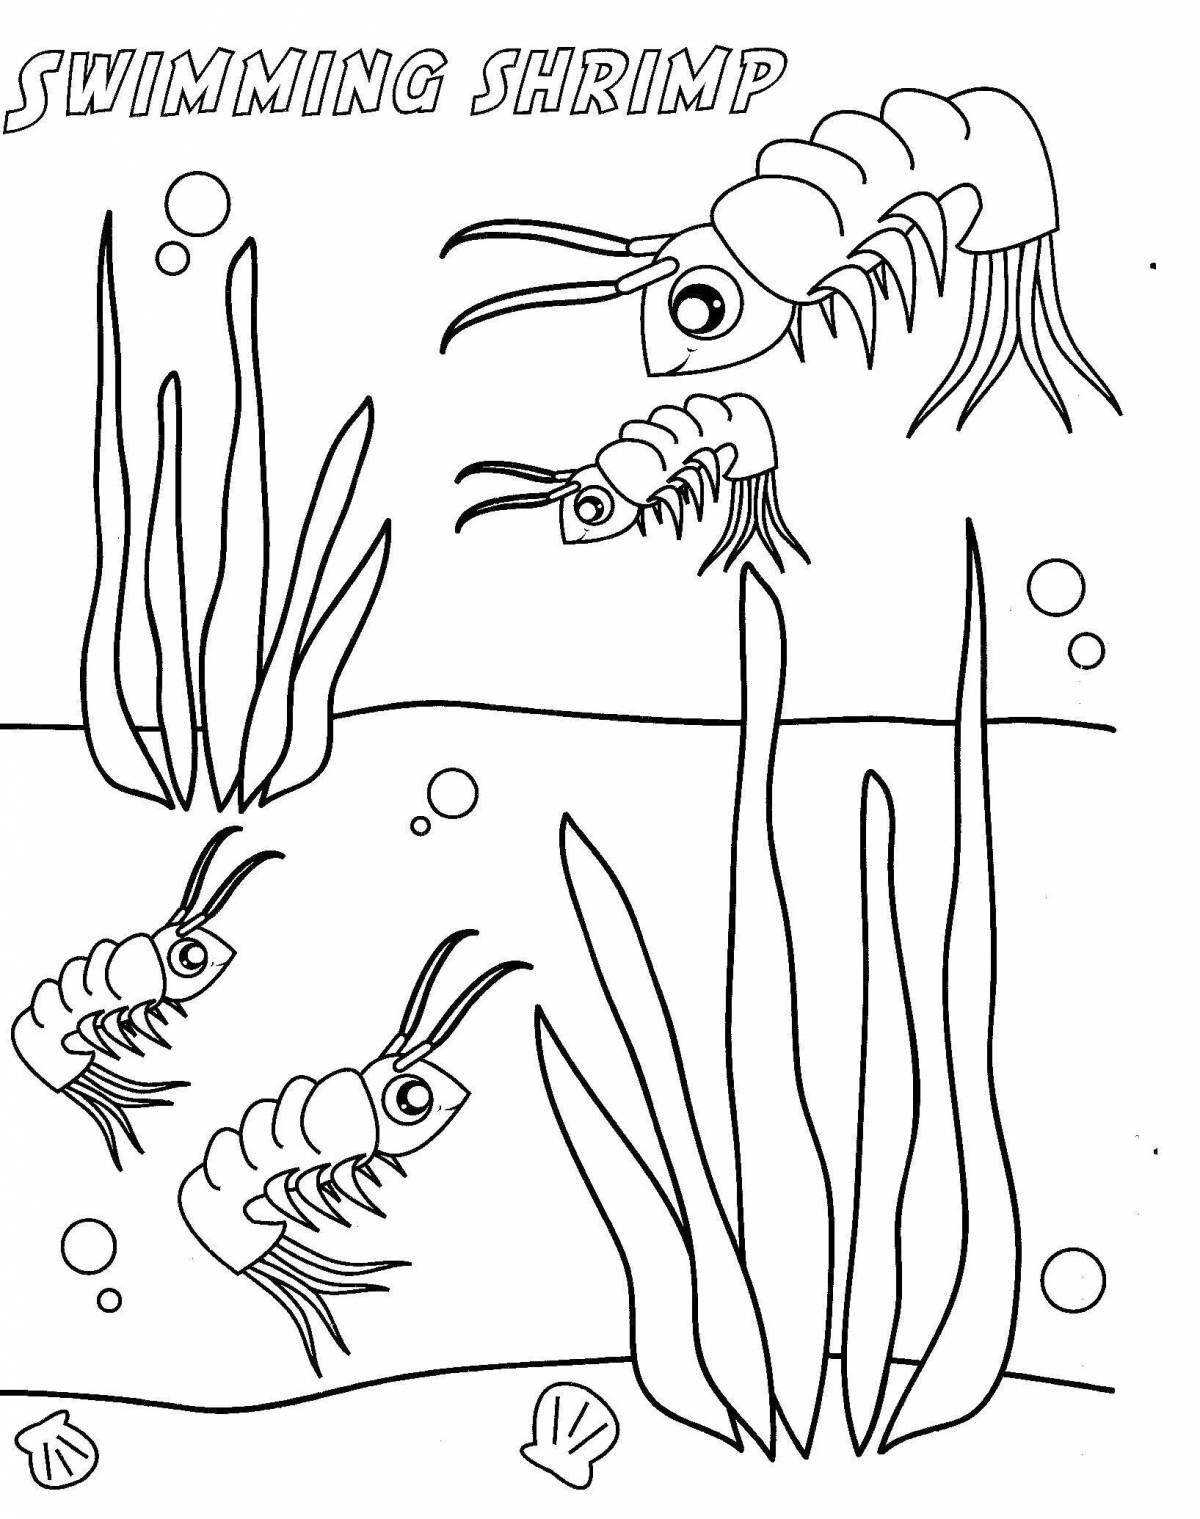 Cute shrimp coloring book